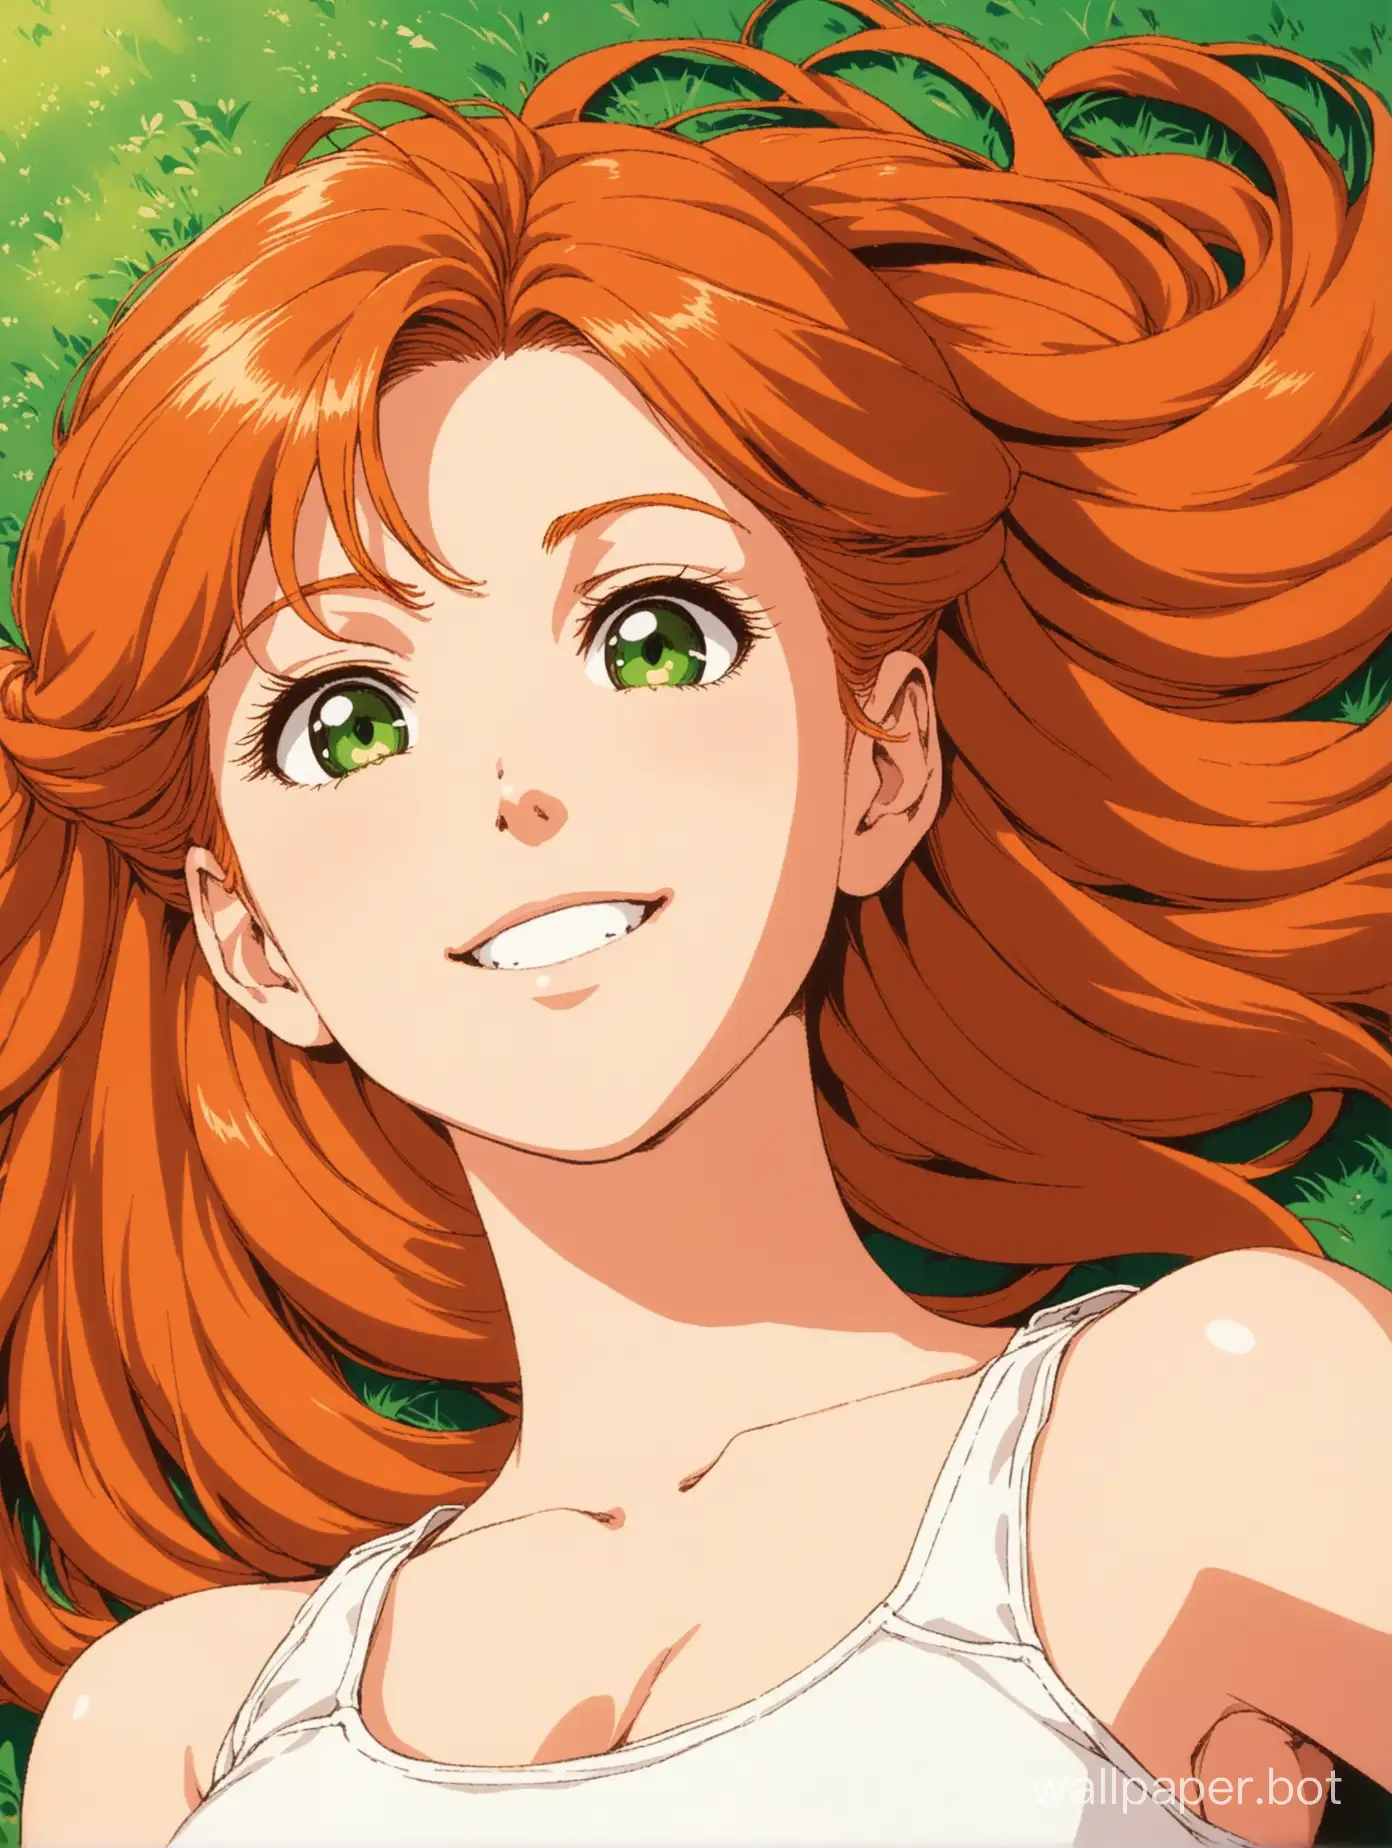 Retro-Anime-Portrait-Introspective-Redhead-Woman-in-Countryside-Setting